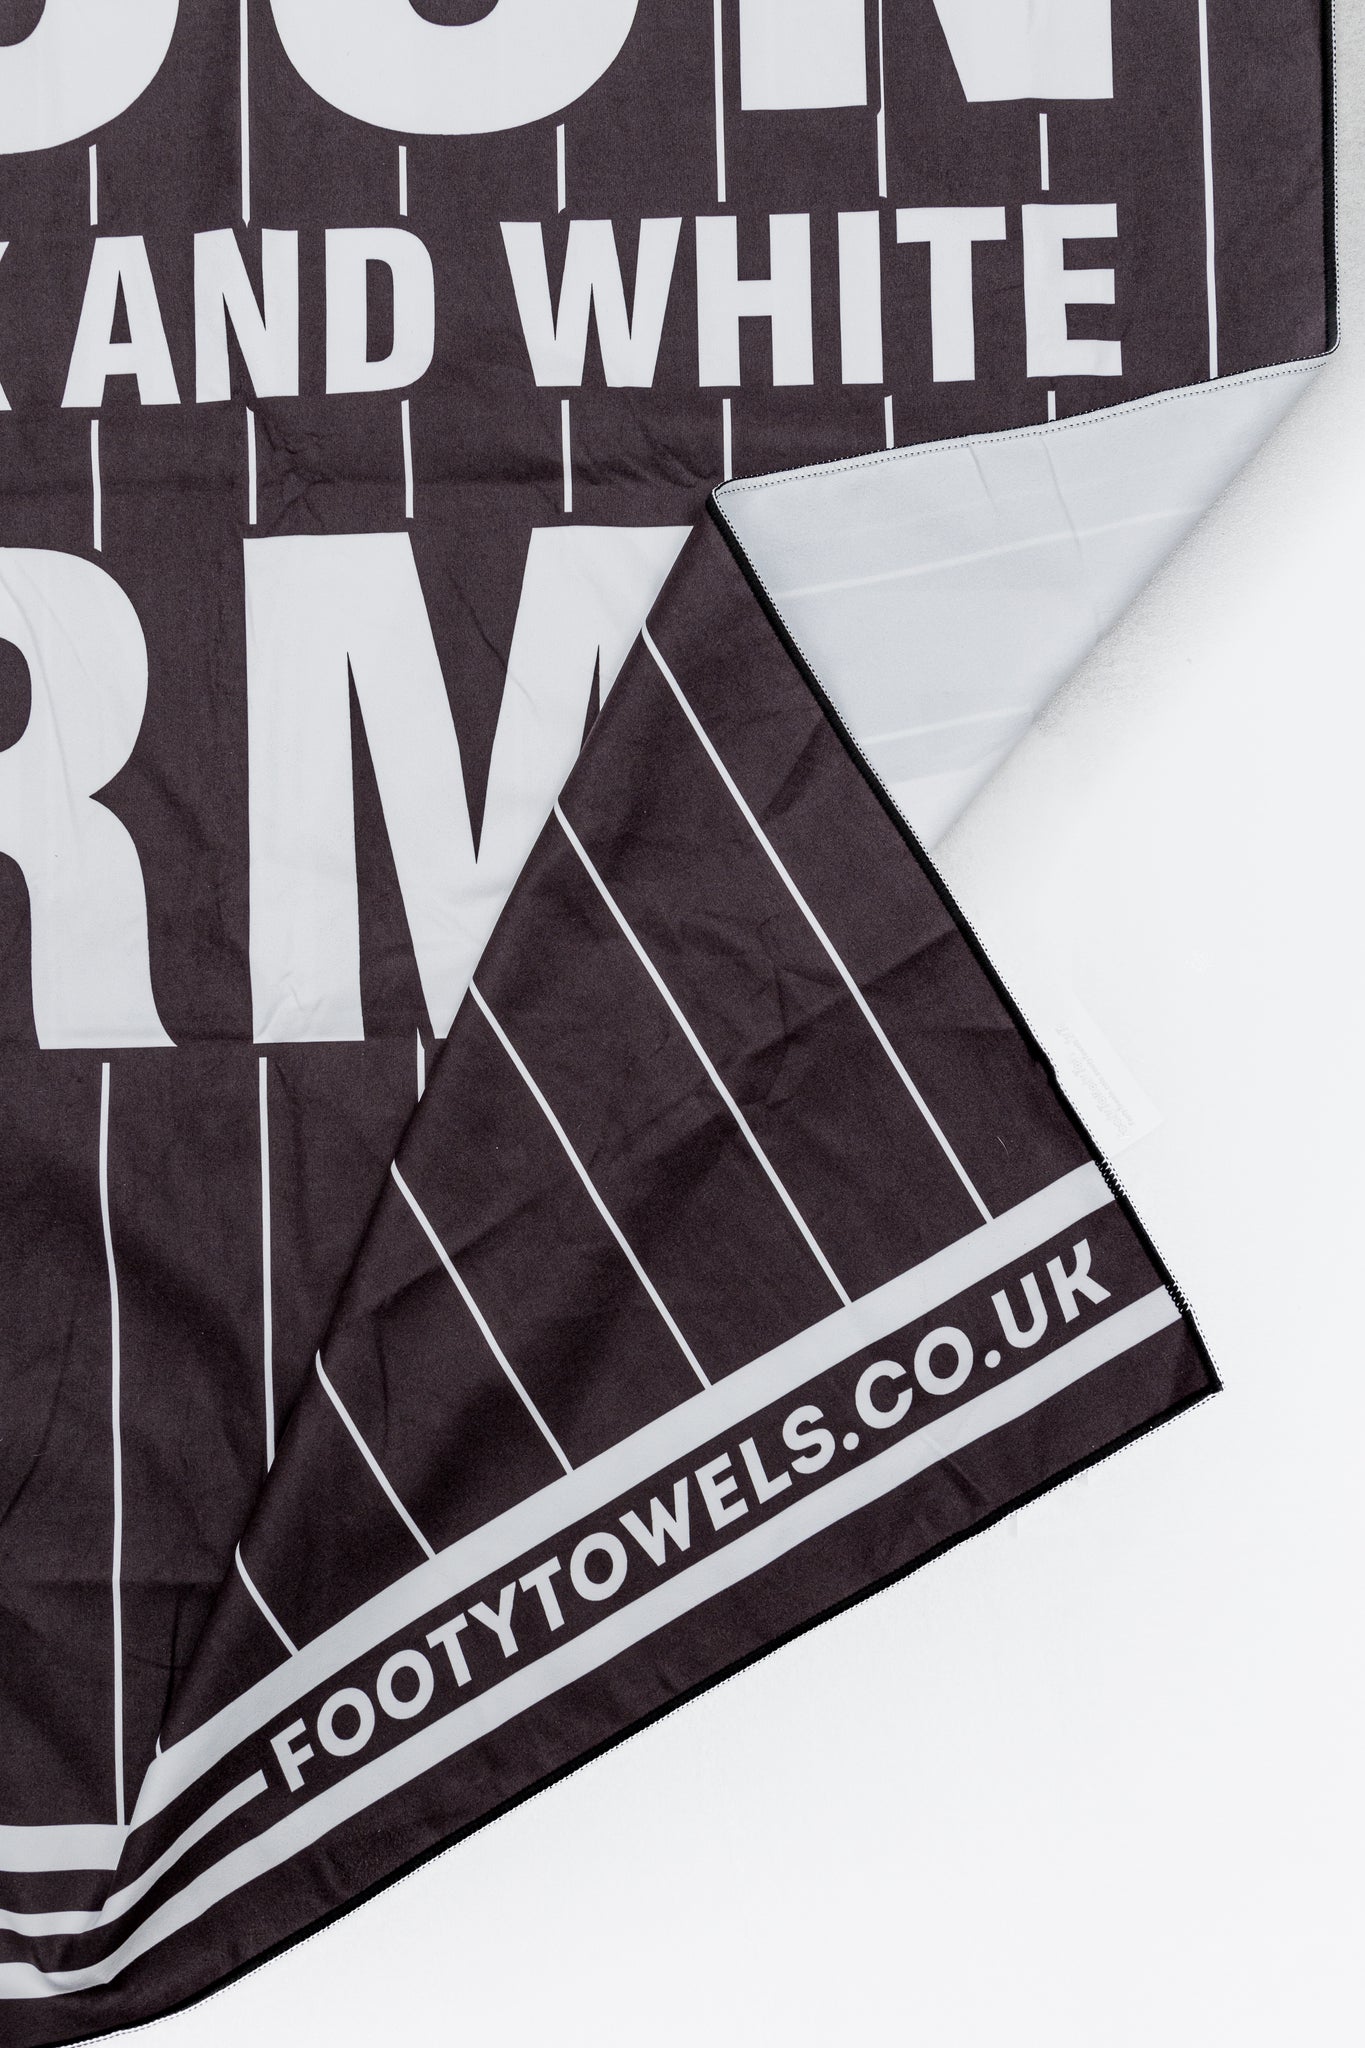 Newcastle United - Toon Toon black & white army – Footy Towels